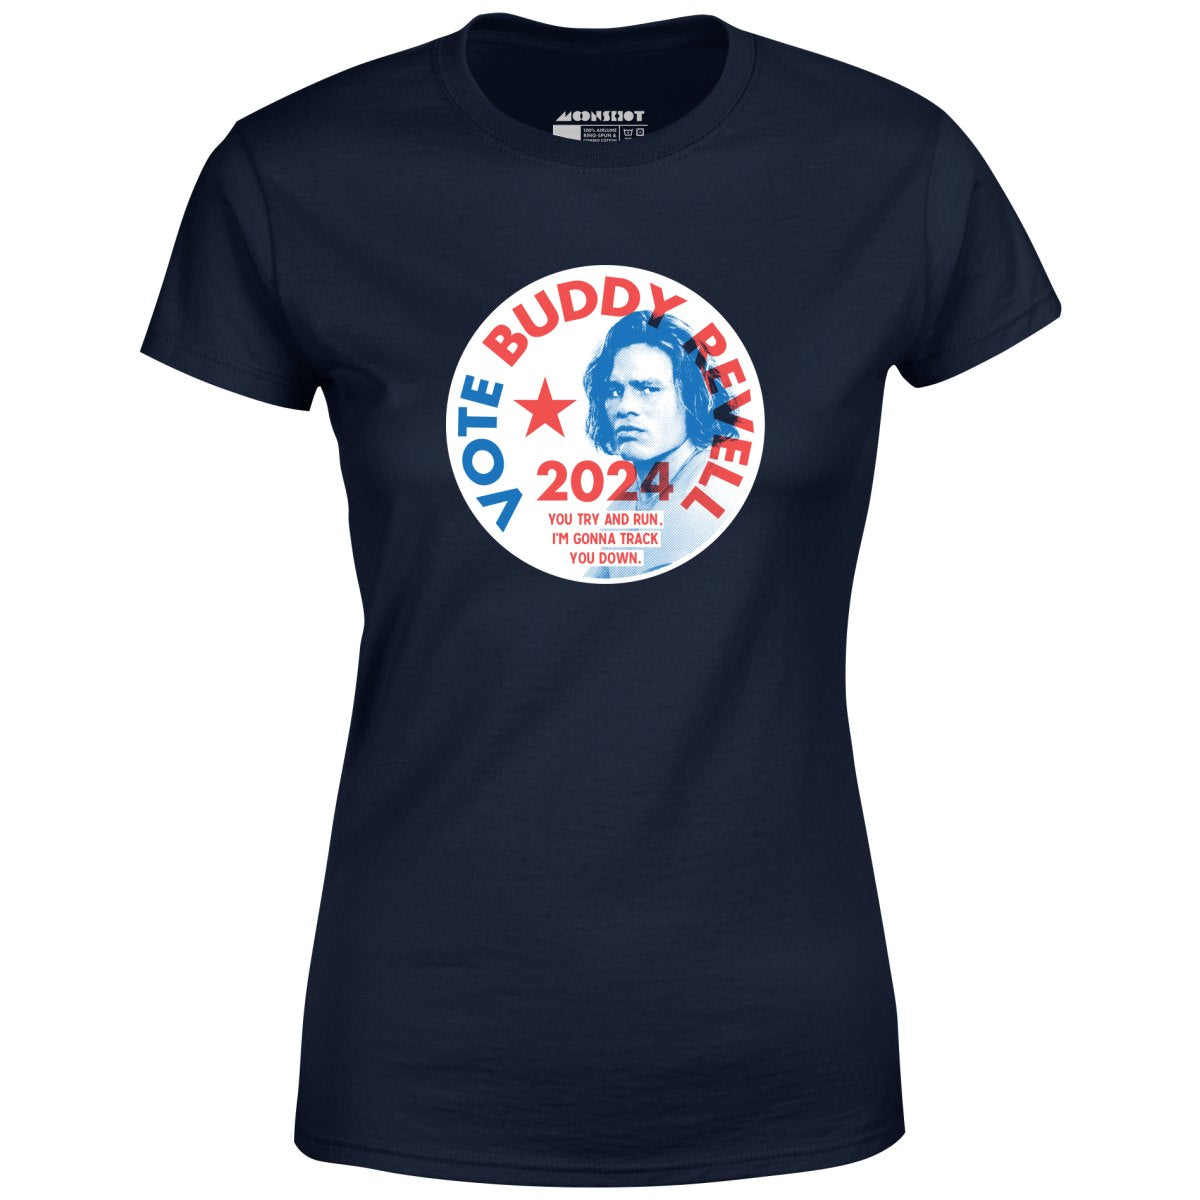 Buddy Revell 2024 - Women's T-Shirt